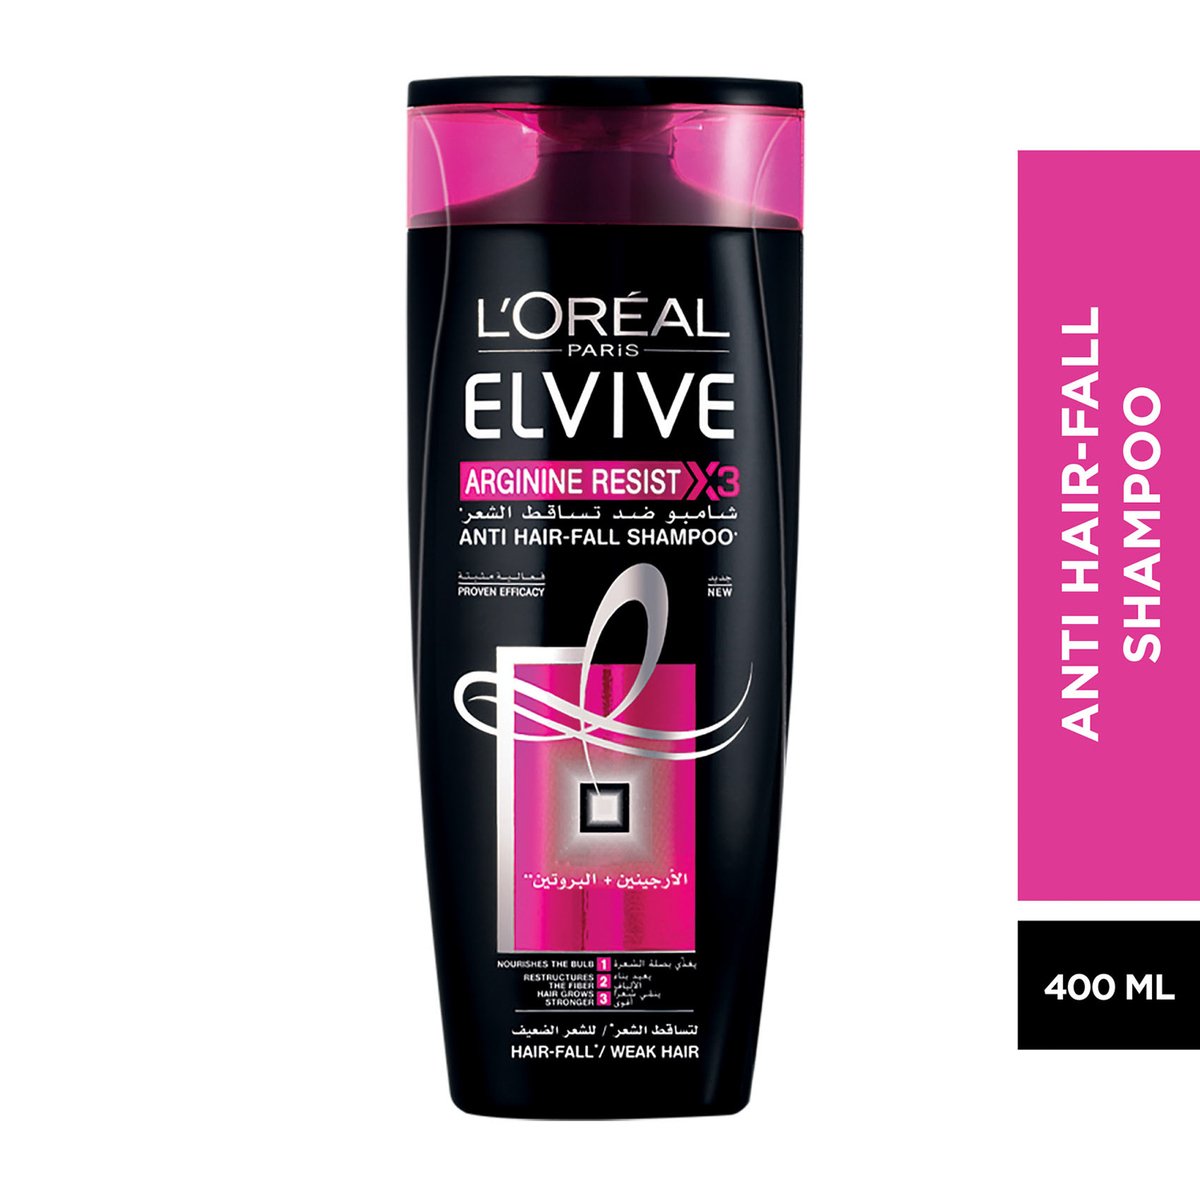 L'Oreal Paris Elvive Arginine Resist Anti Hair Fall Shampoo 400 ml